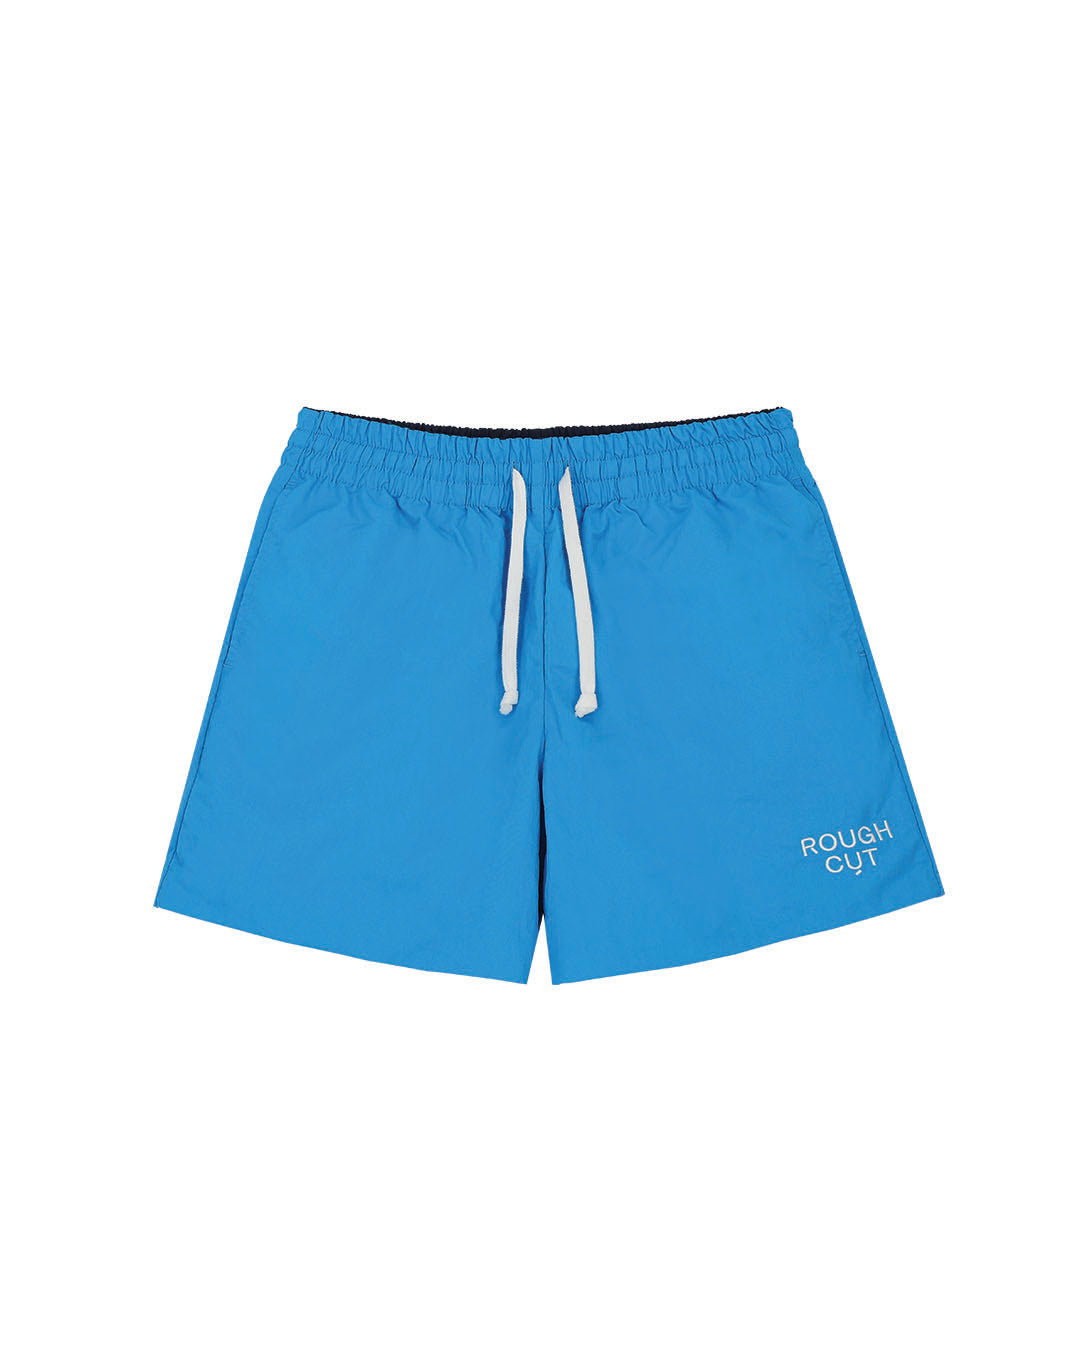 Reversible Shorts®  / Navy + Blue